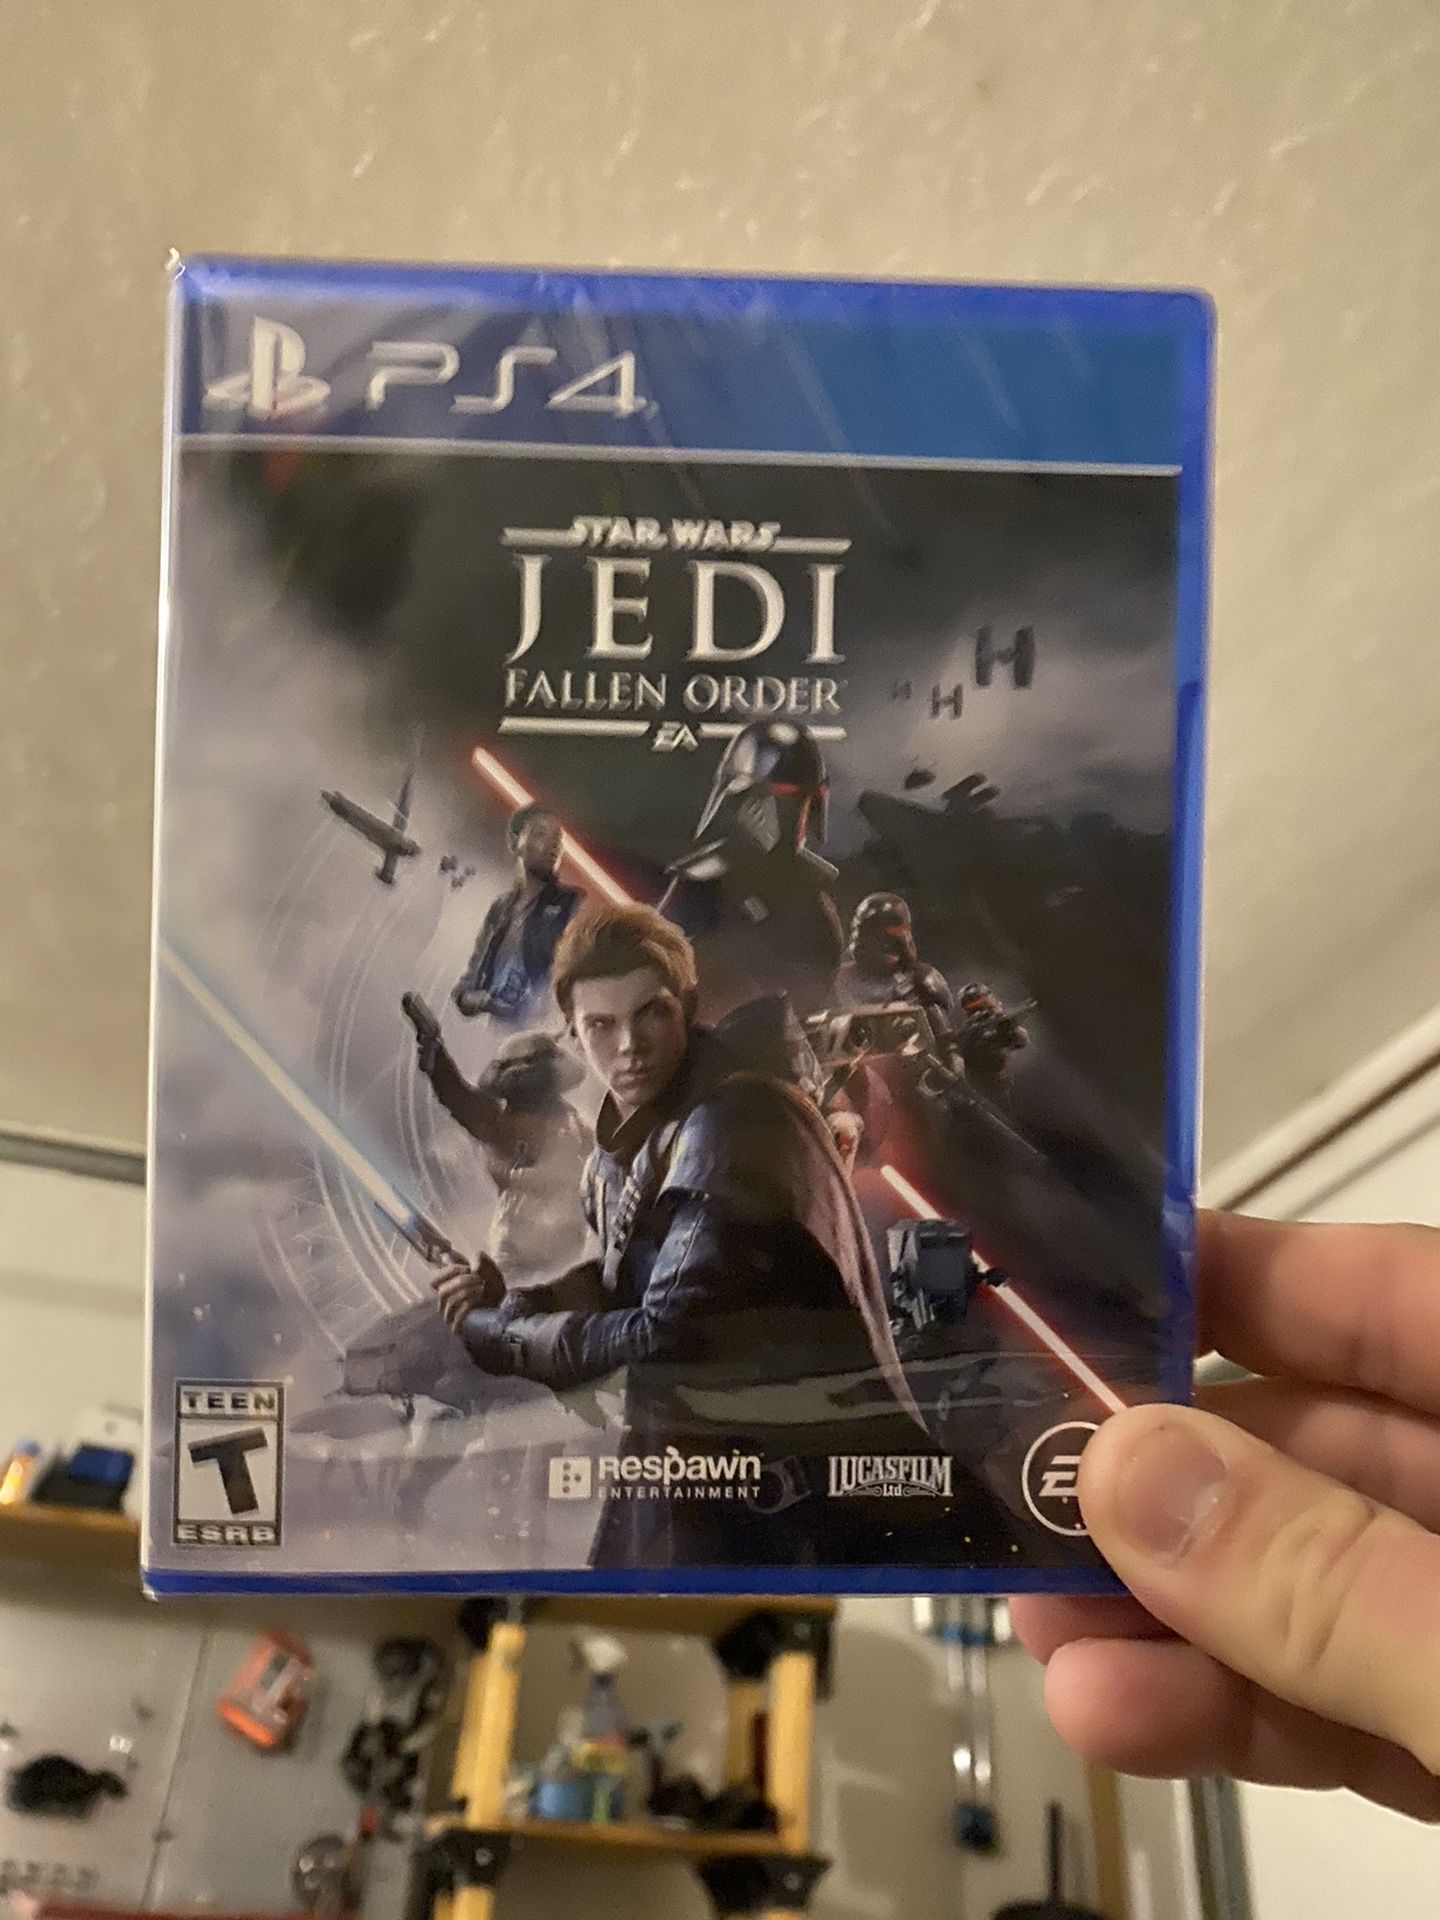 Star Wars Jedi fallen order PS4